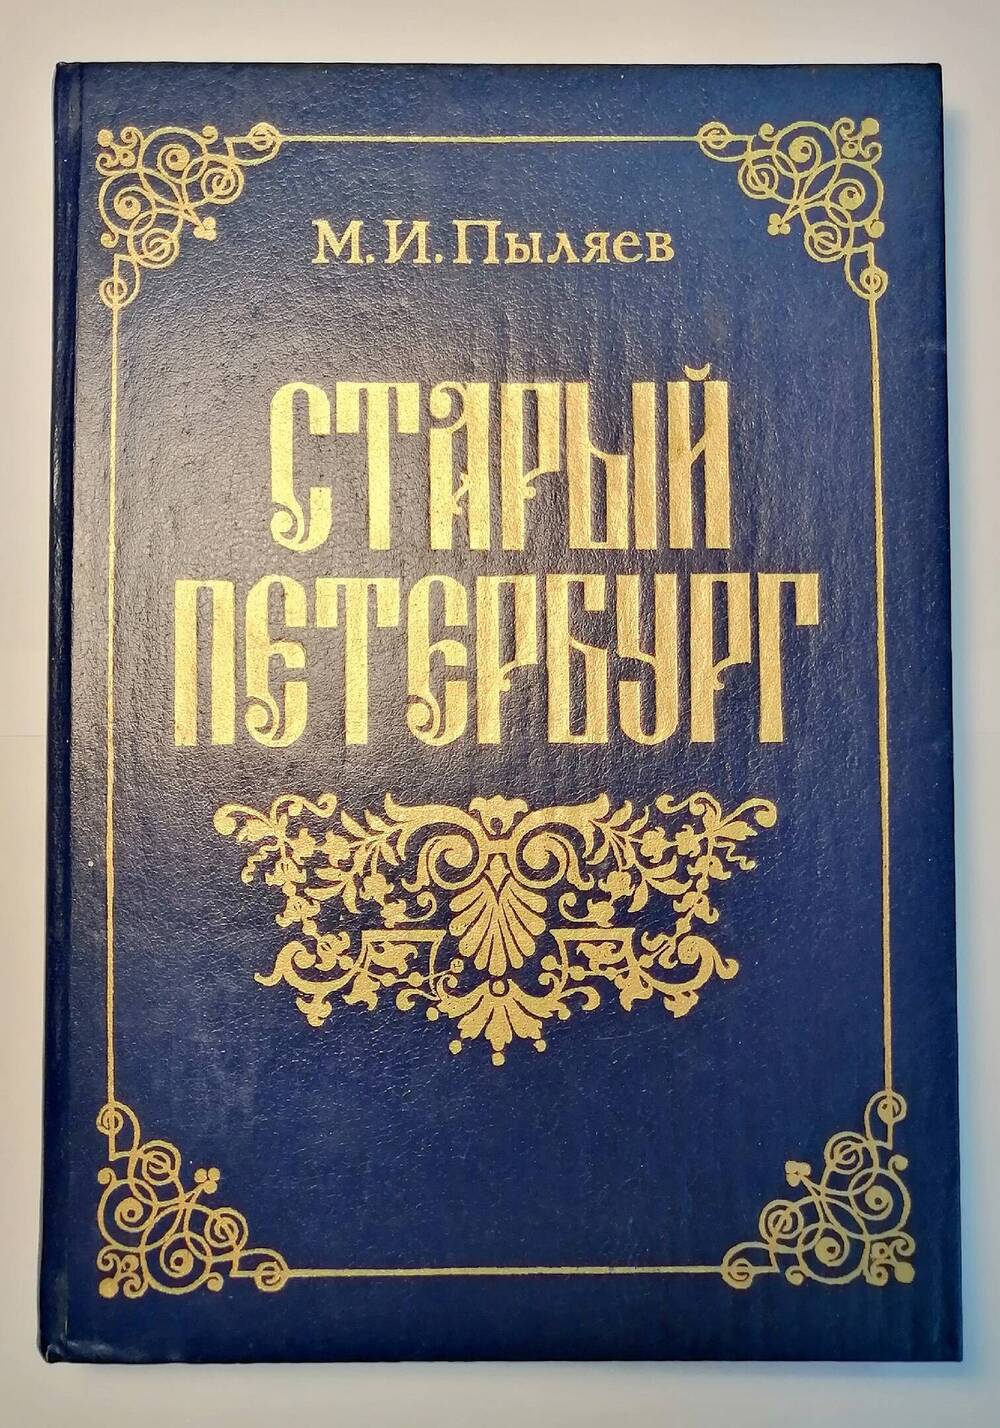 Книга «СТАРЫЙ ПЕТЕРБУРГ» М. И. Пыляев